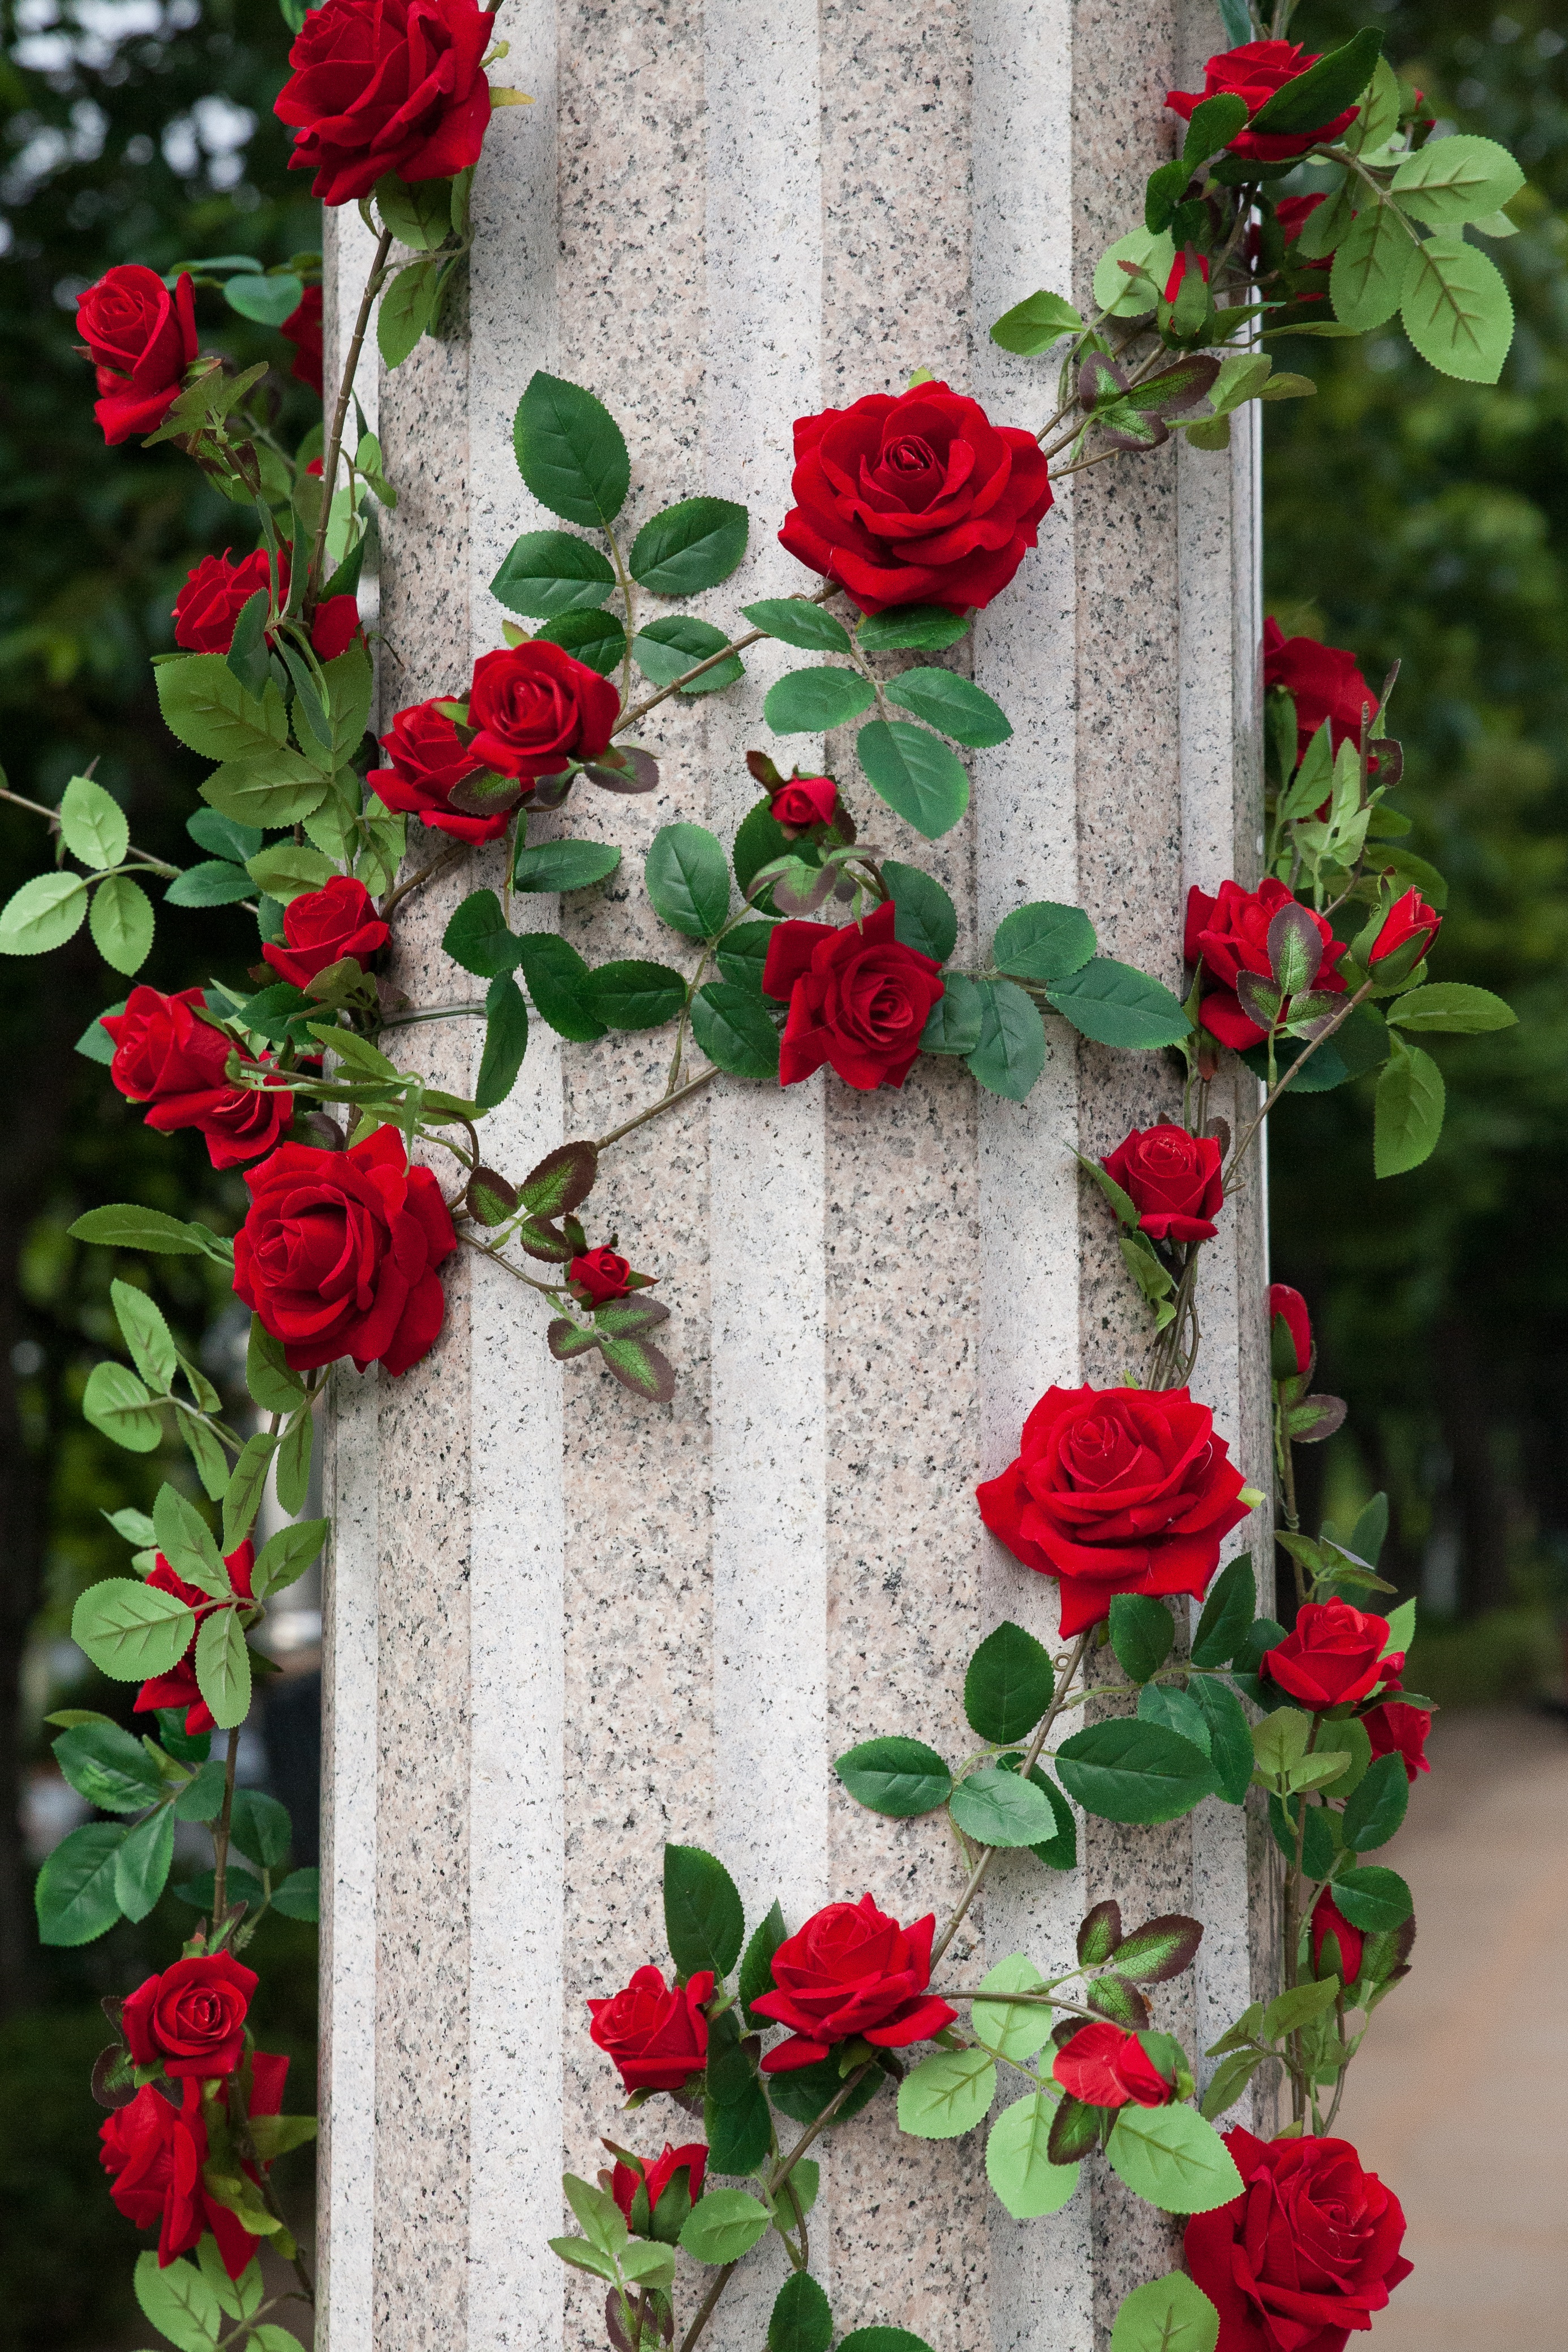 80,000+ Best Rose Wallpaper Photos · 100% Free Download · Pexels Stock  Photos